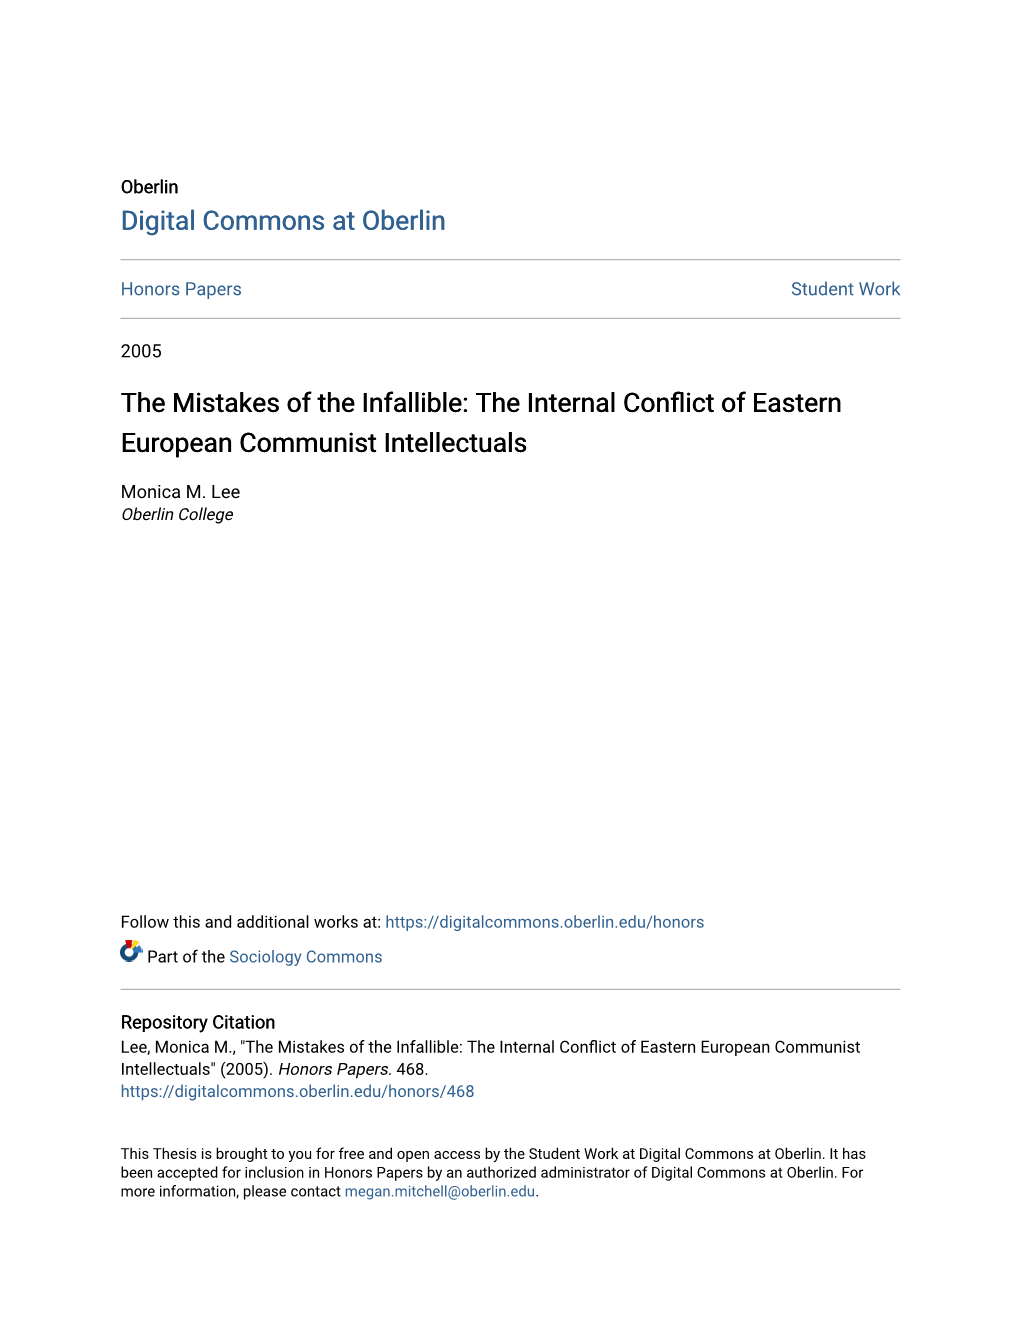 The Internal Conflict of Eastern European Communist Intellectuals